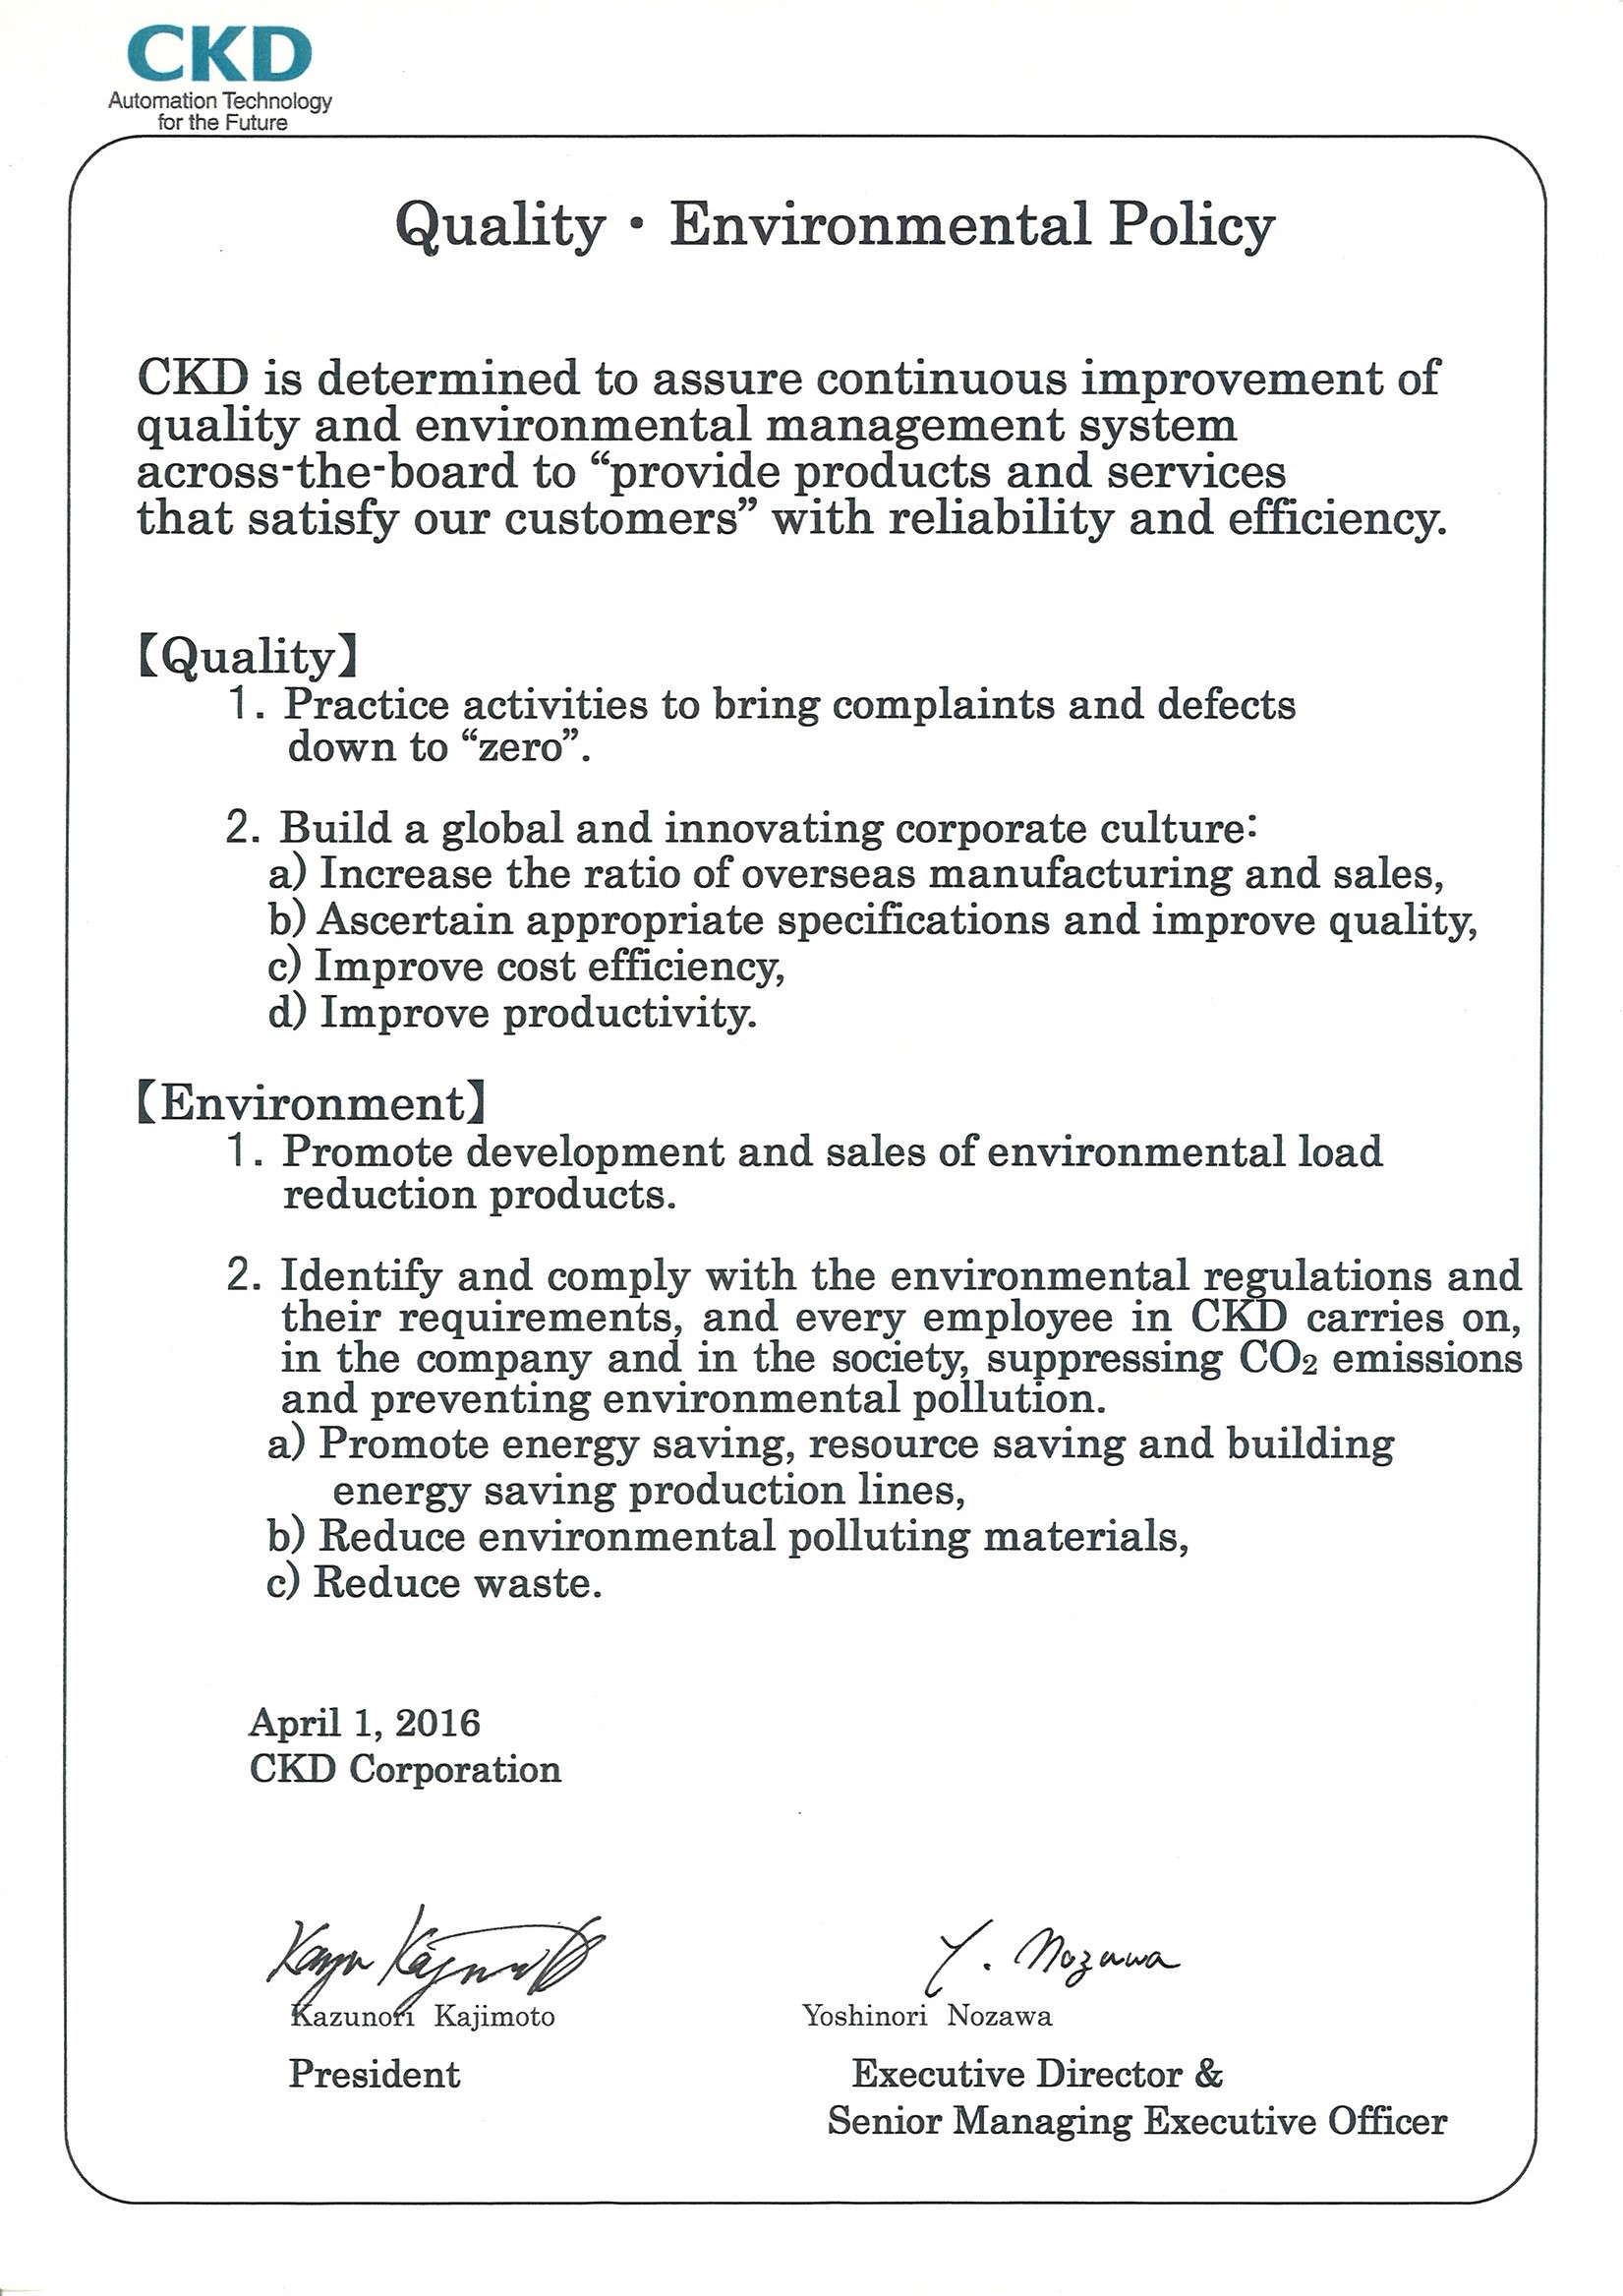 Quality-Environmental Policy